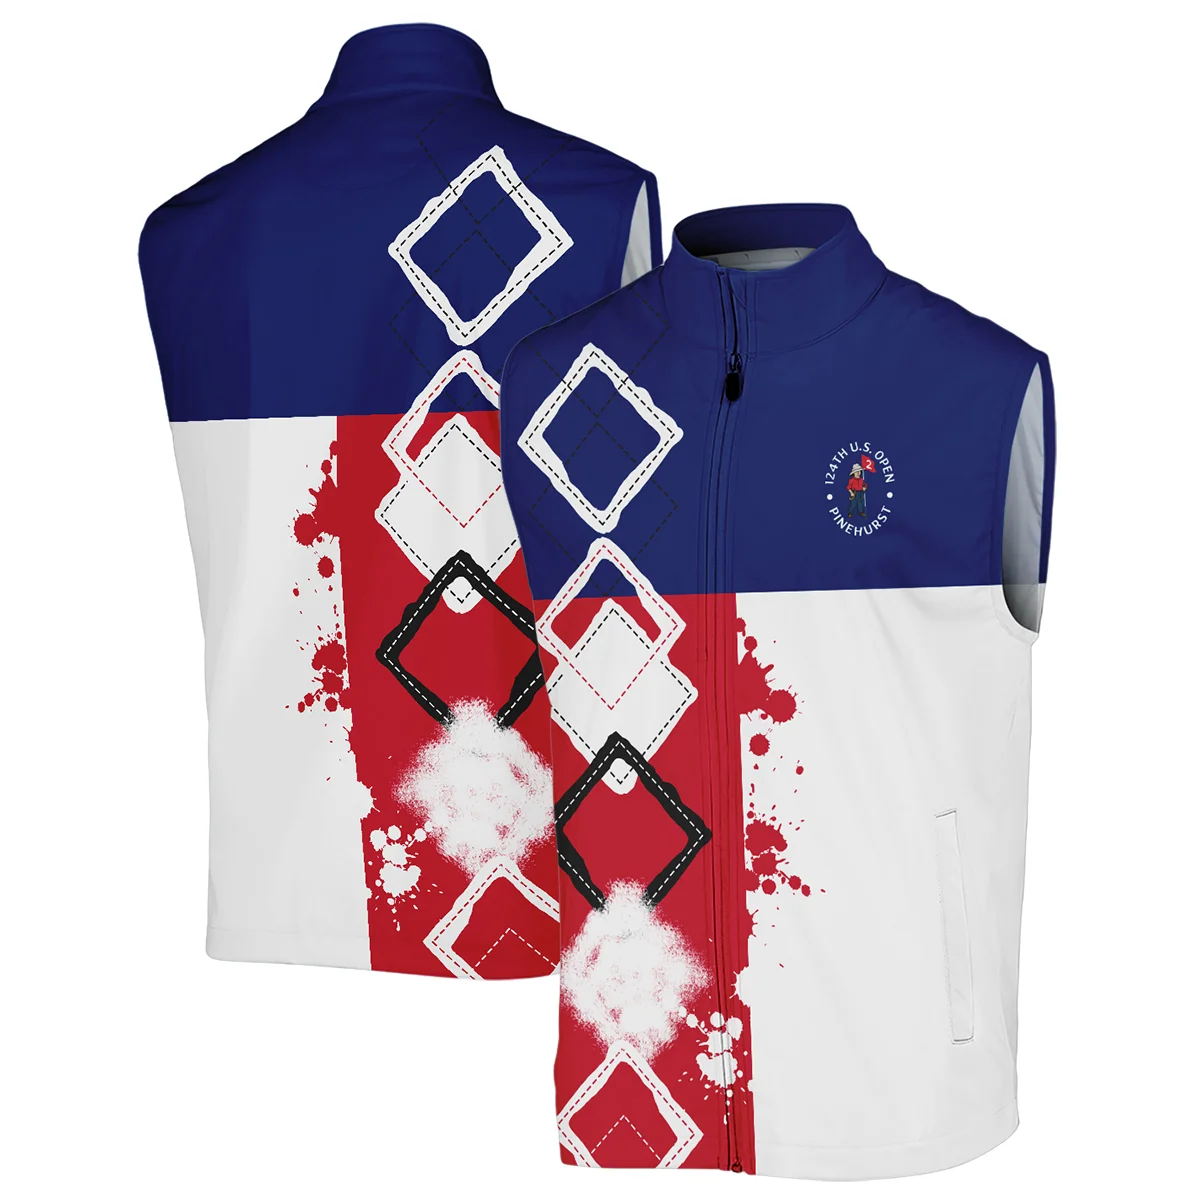 124th U.S. Open Pinehurst Titleist Sleeveless Jacket Blue Red White Pattern Grunge All Over Print Sleeveless Jacket